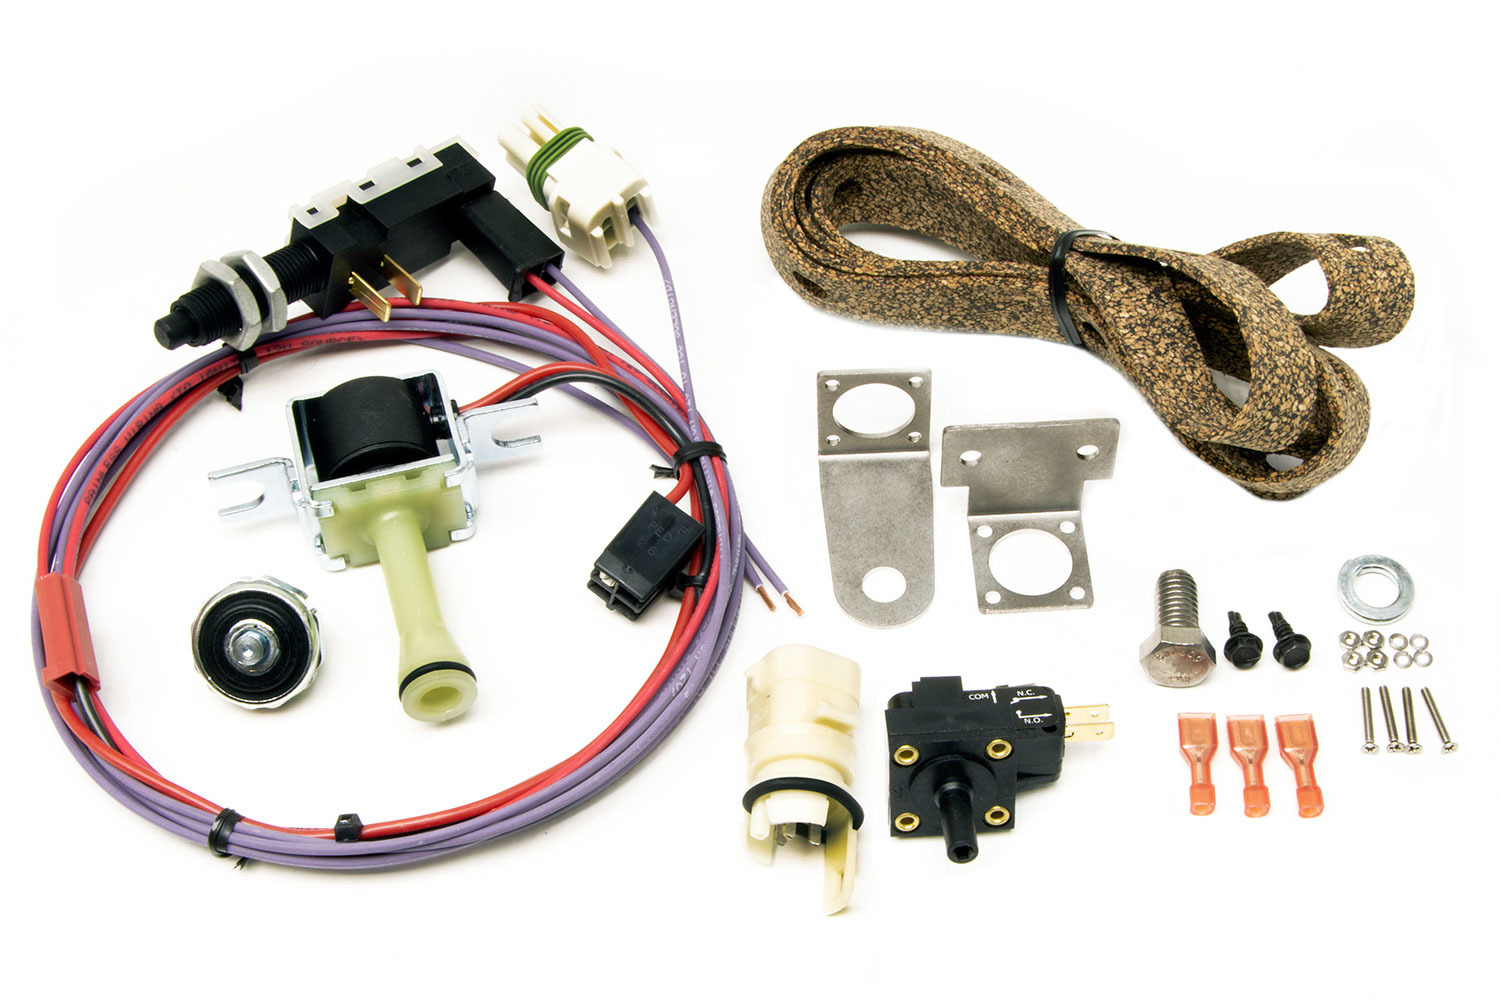 Painless Wiring 60109 Transmission Wiring Harness, Torque Converter Lockup, Gasket / Hardware / Switch, 700R4, Kit